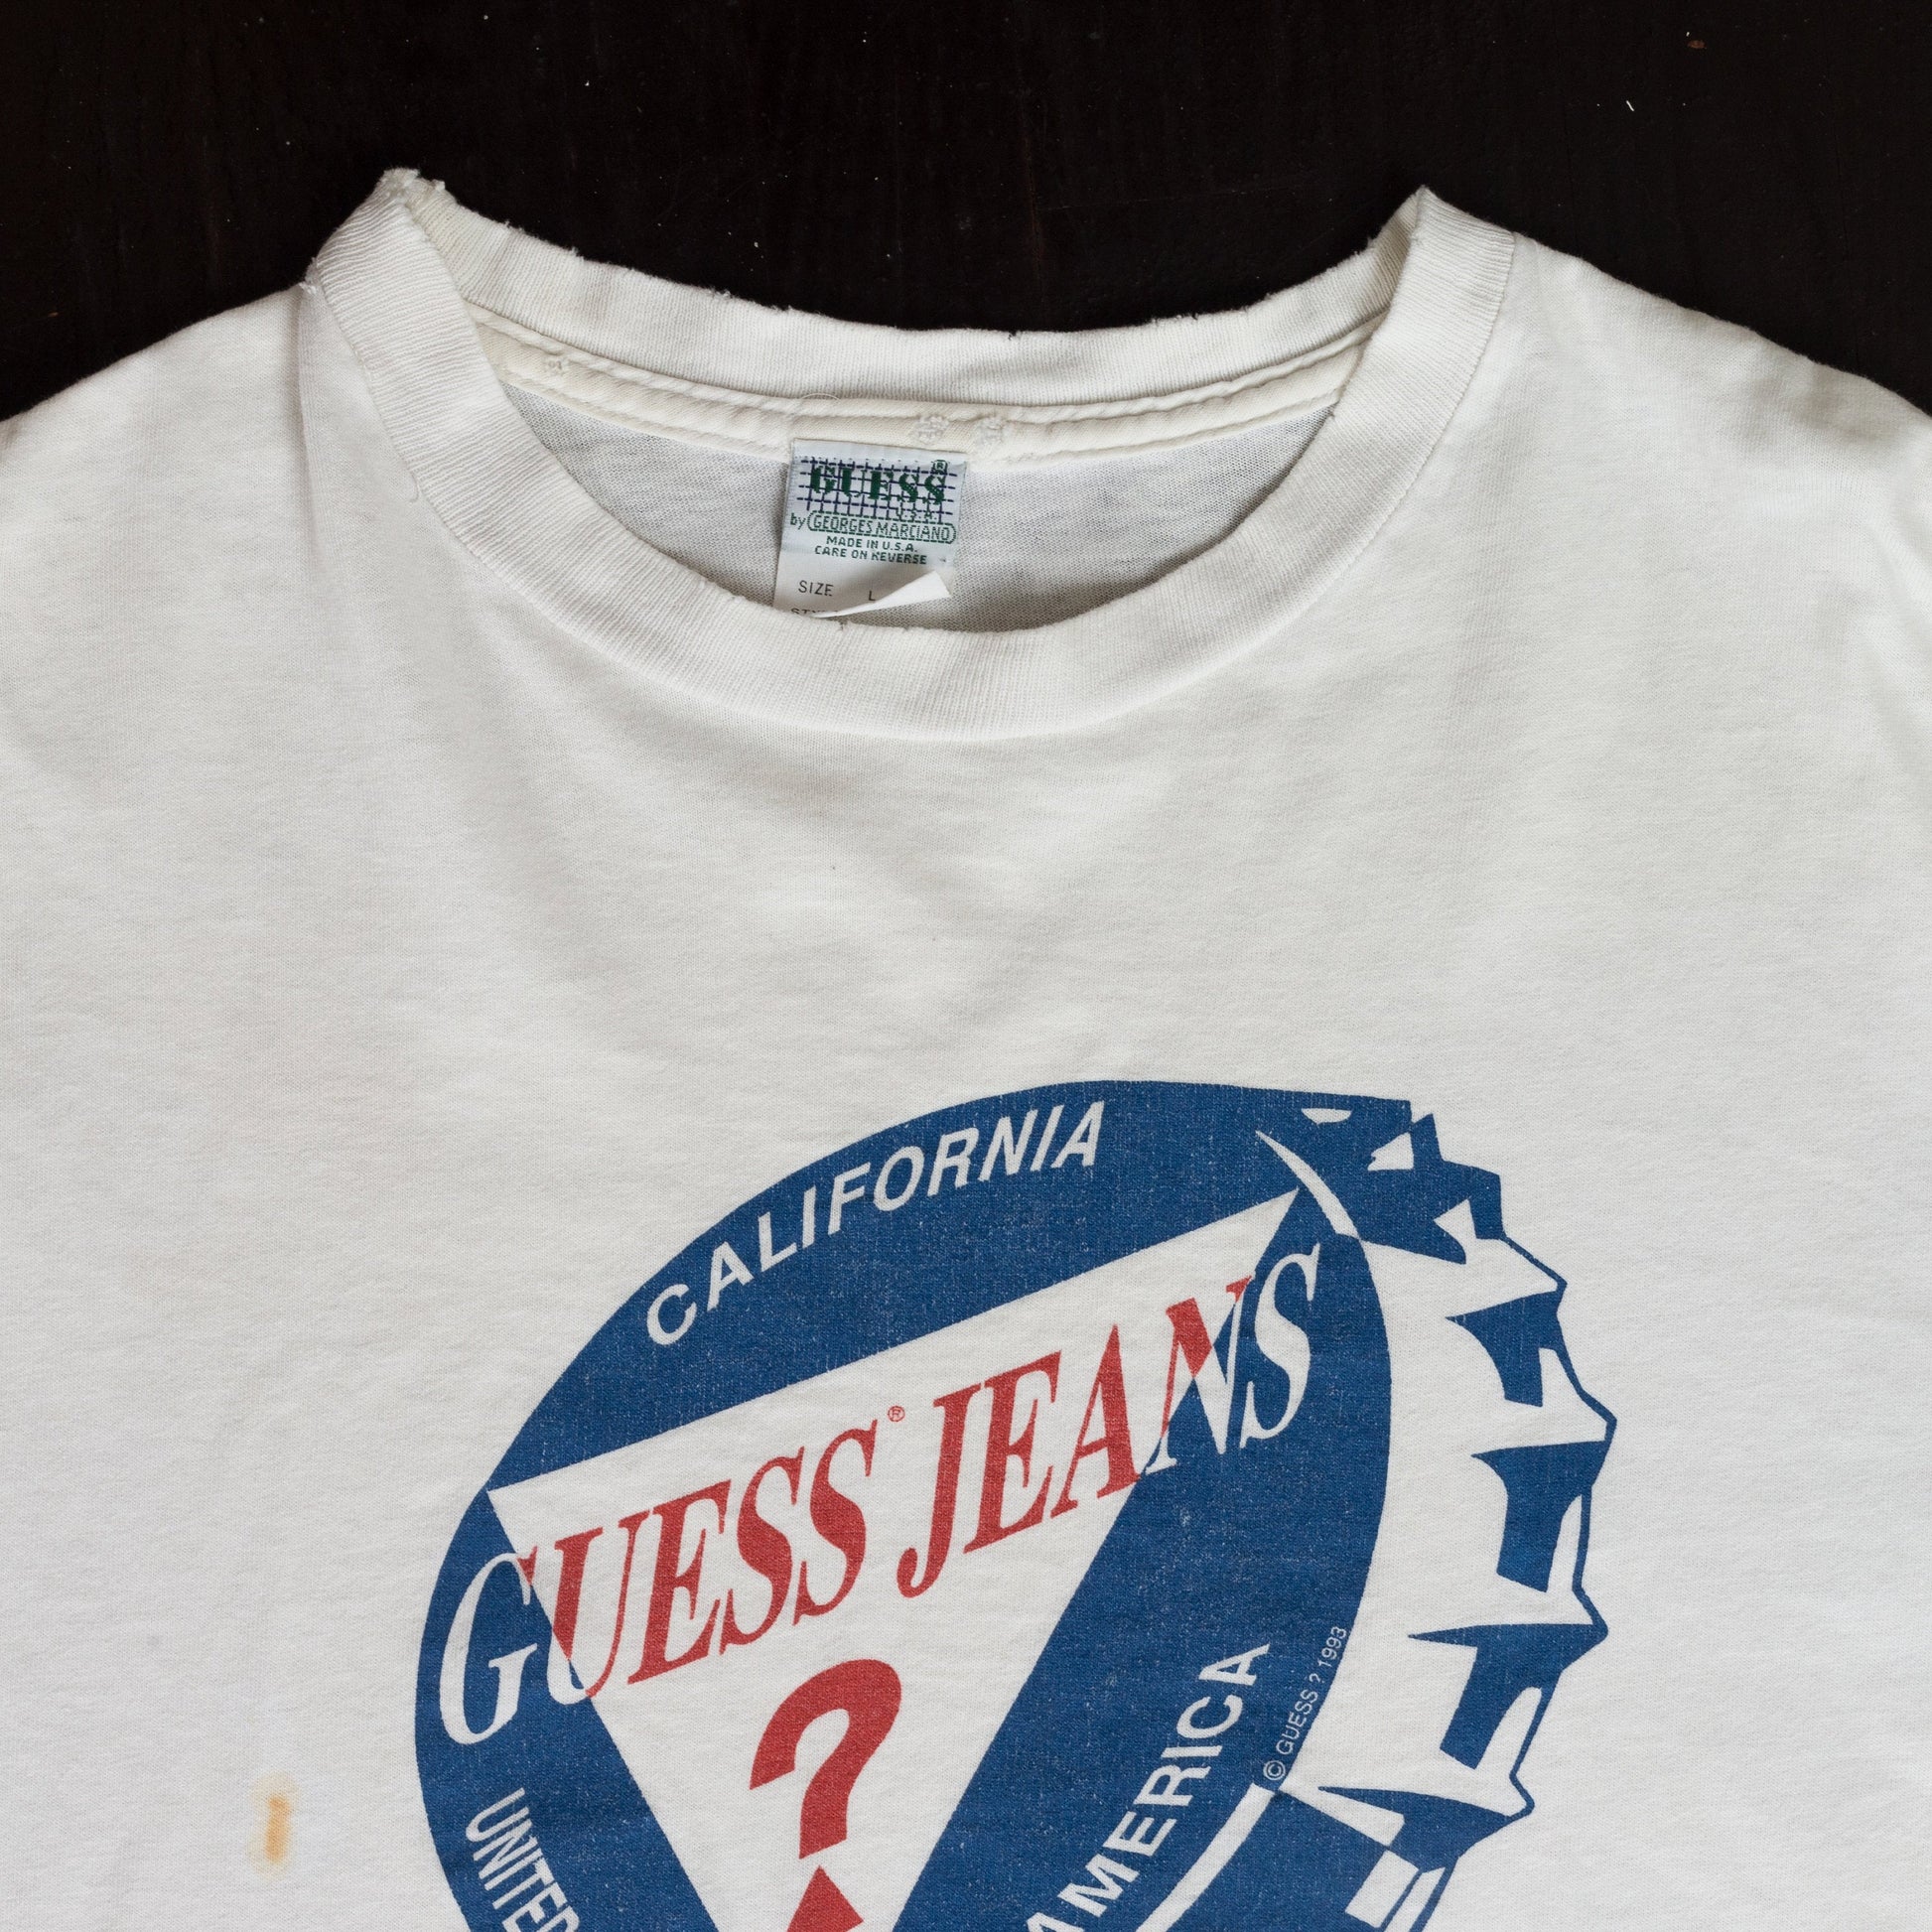 90s Guess Jeans T Shirt - Men's Large, Women's XL – Flying Apple Vintage